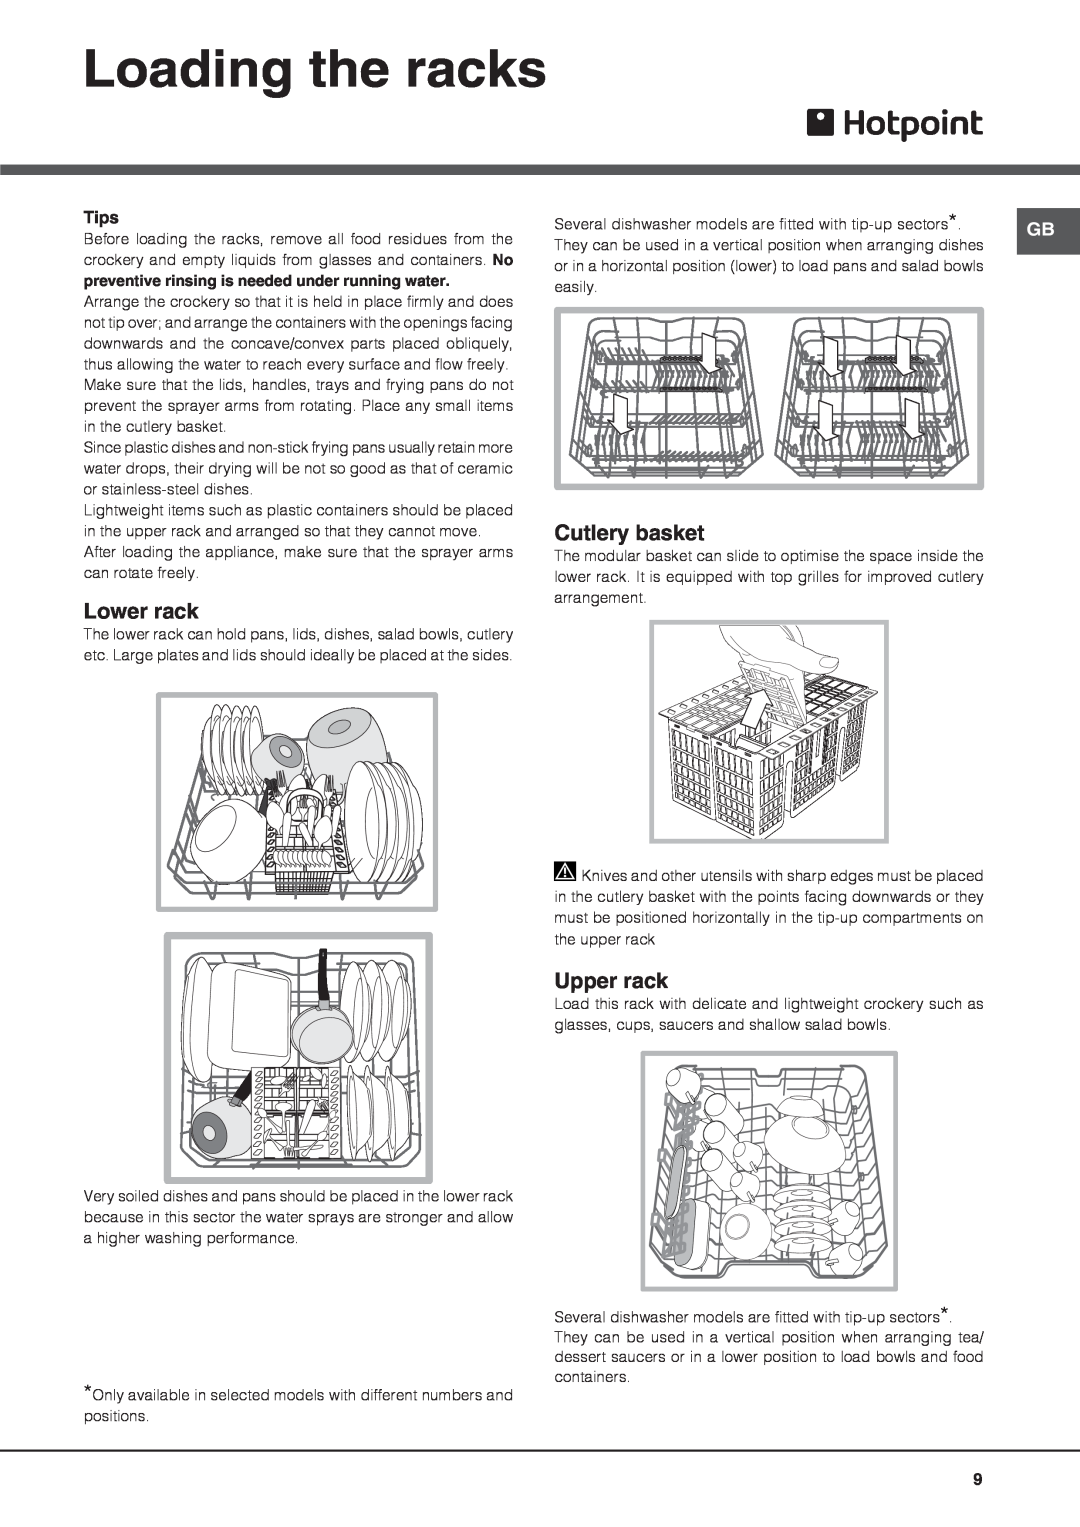 Hotpoint FDYF 11011 manual Loading the racks, Lower rack, Cutlery basket, Upper rack, Tips 